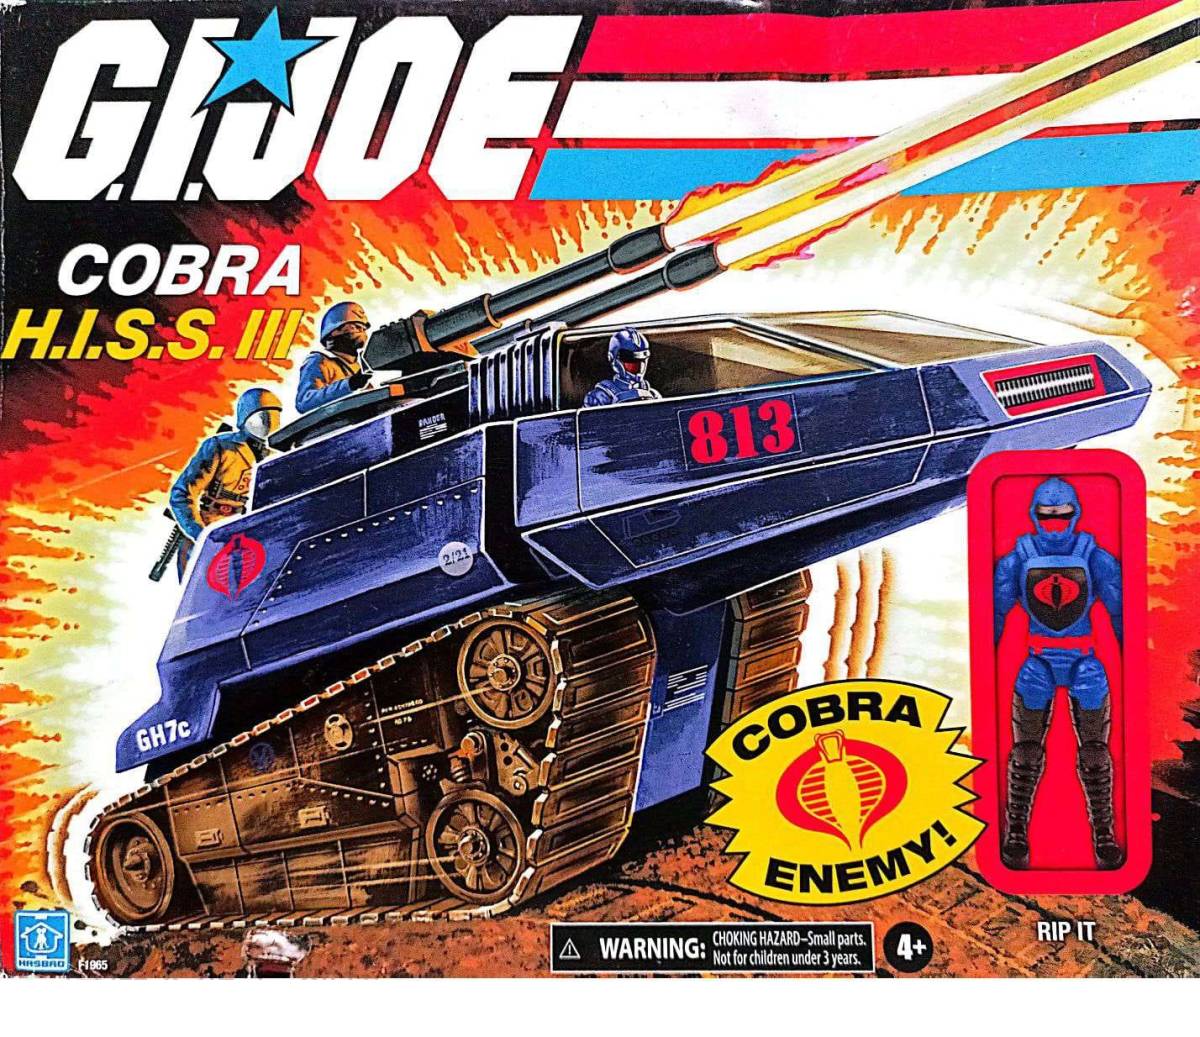 220404)691) US版 ハスブロ G.I.ジョー コブラヒス Cobra H.I.S.III & ドライバー 未開封品 新品